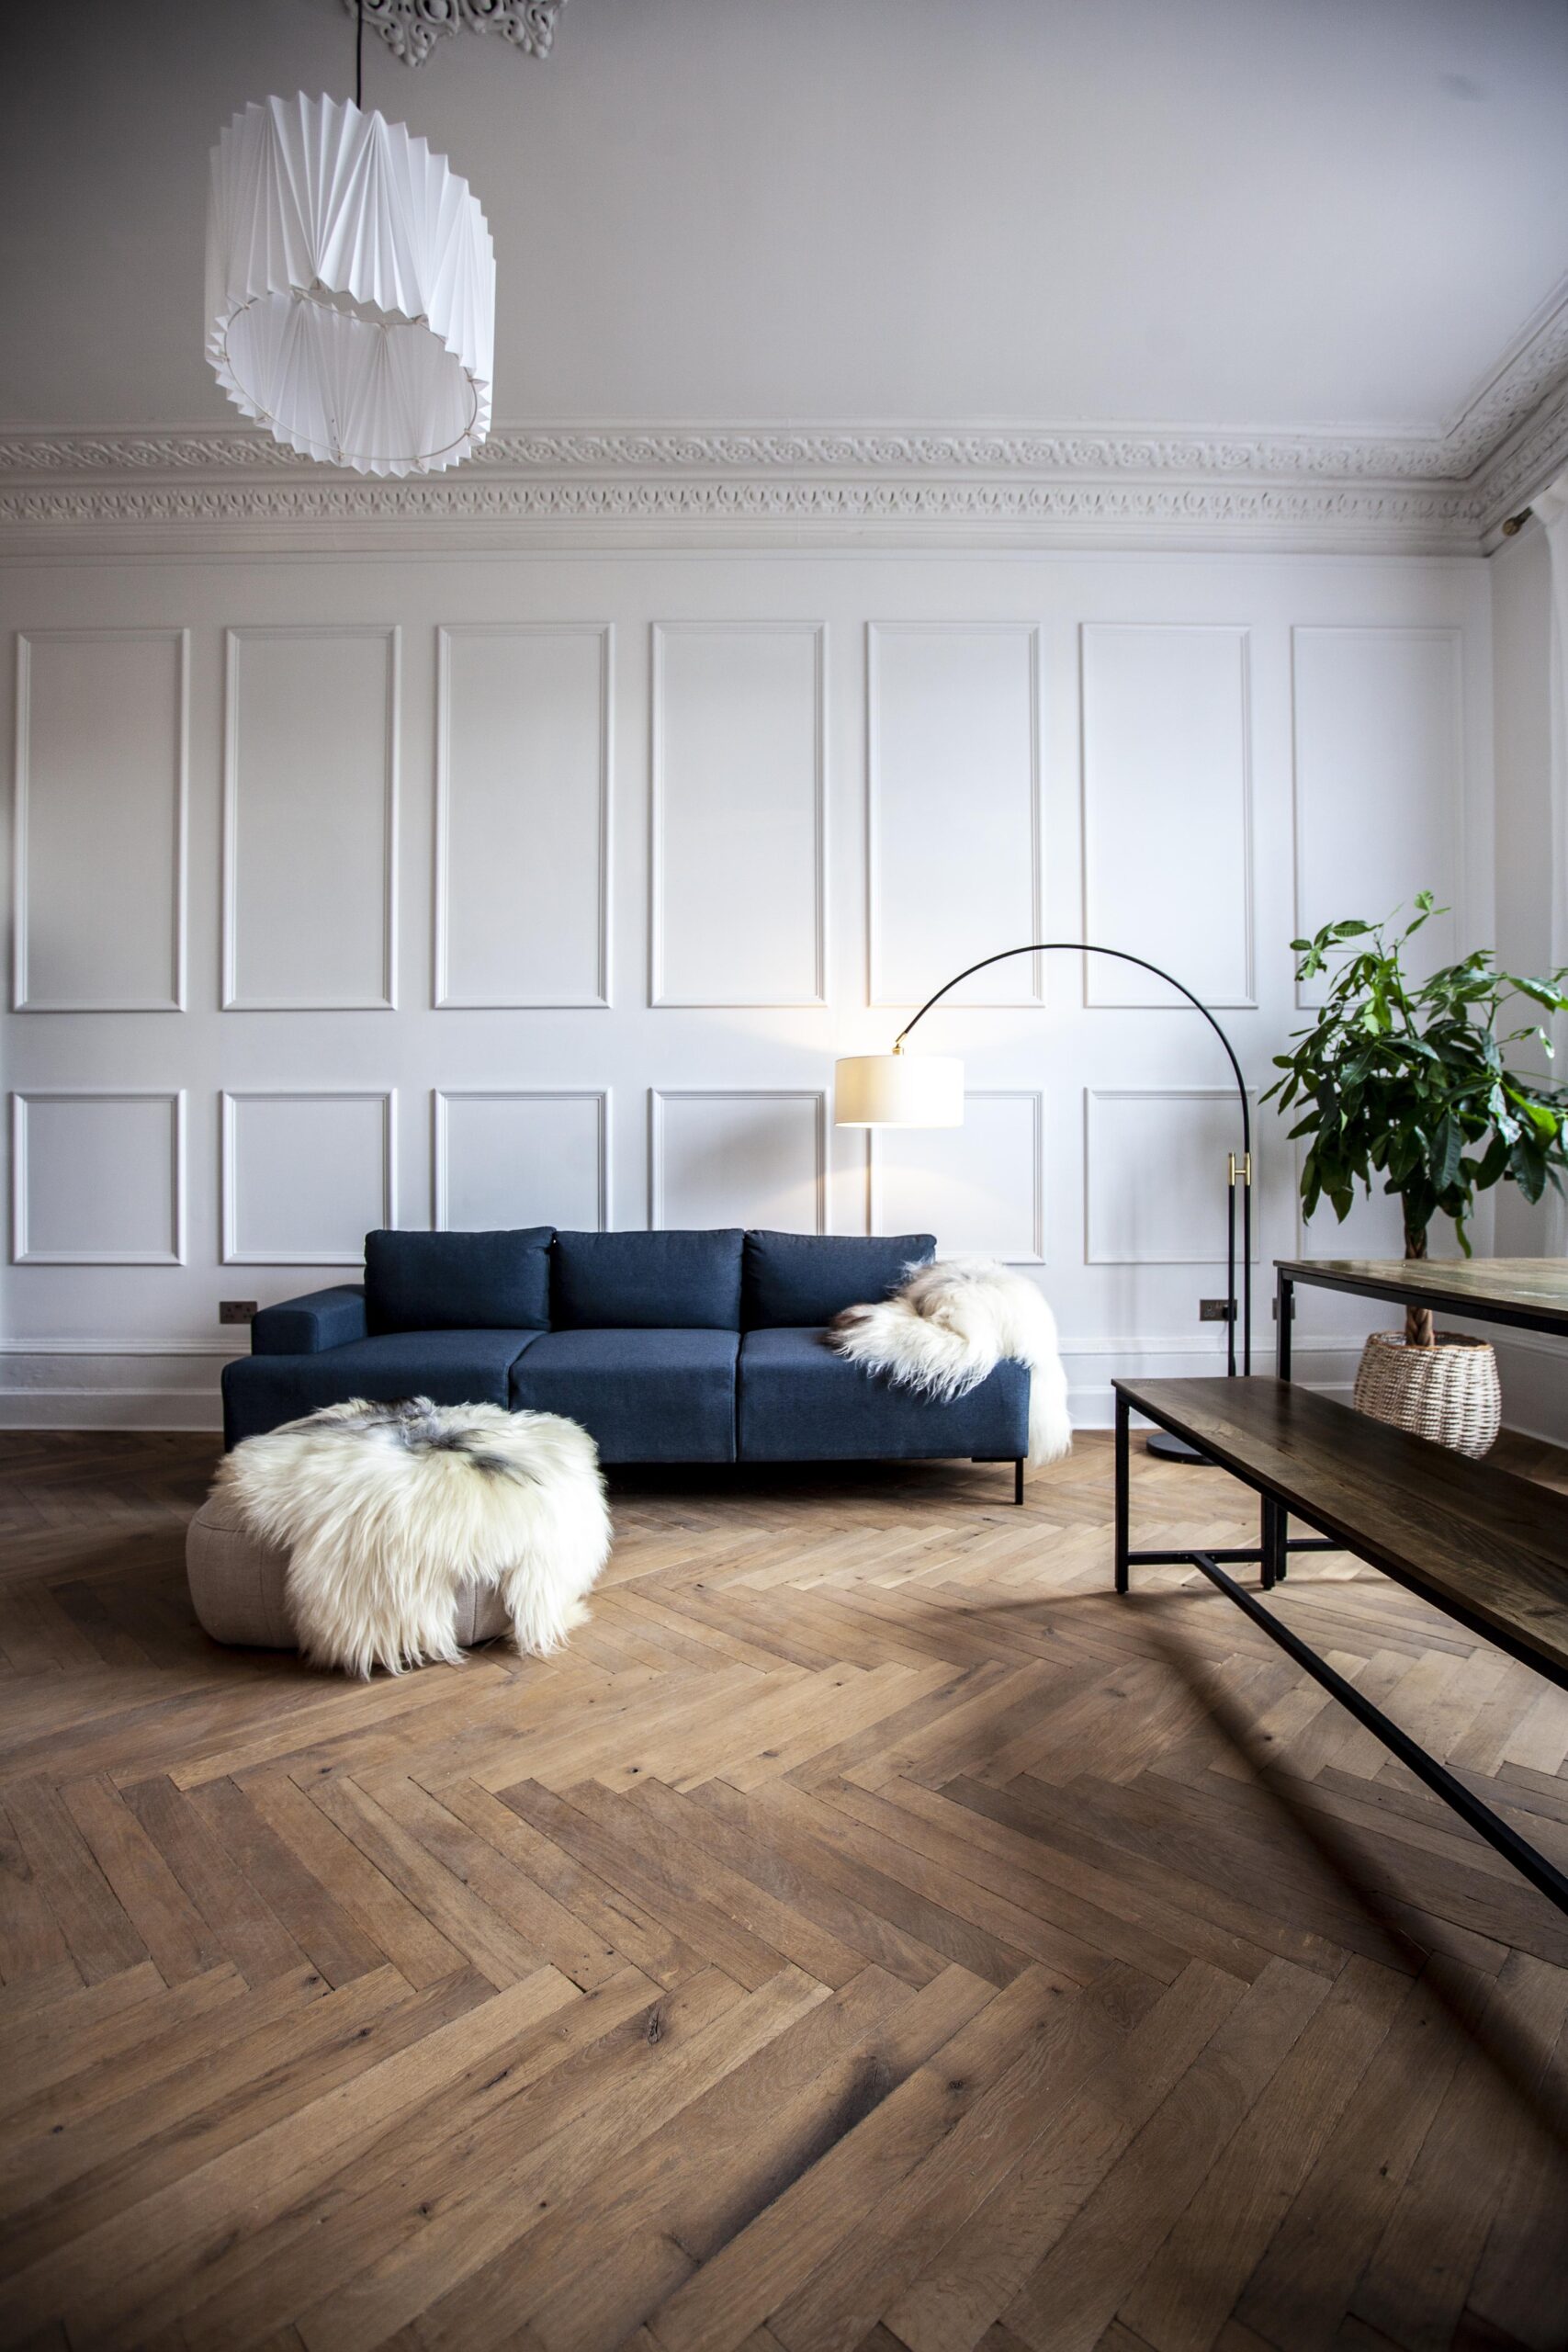 Design Ideas for a Parisian Chic Living Space